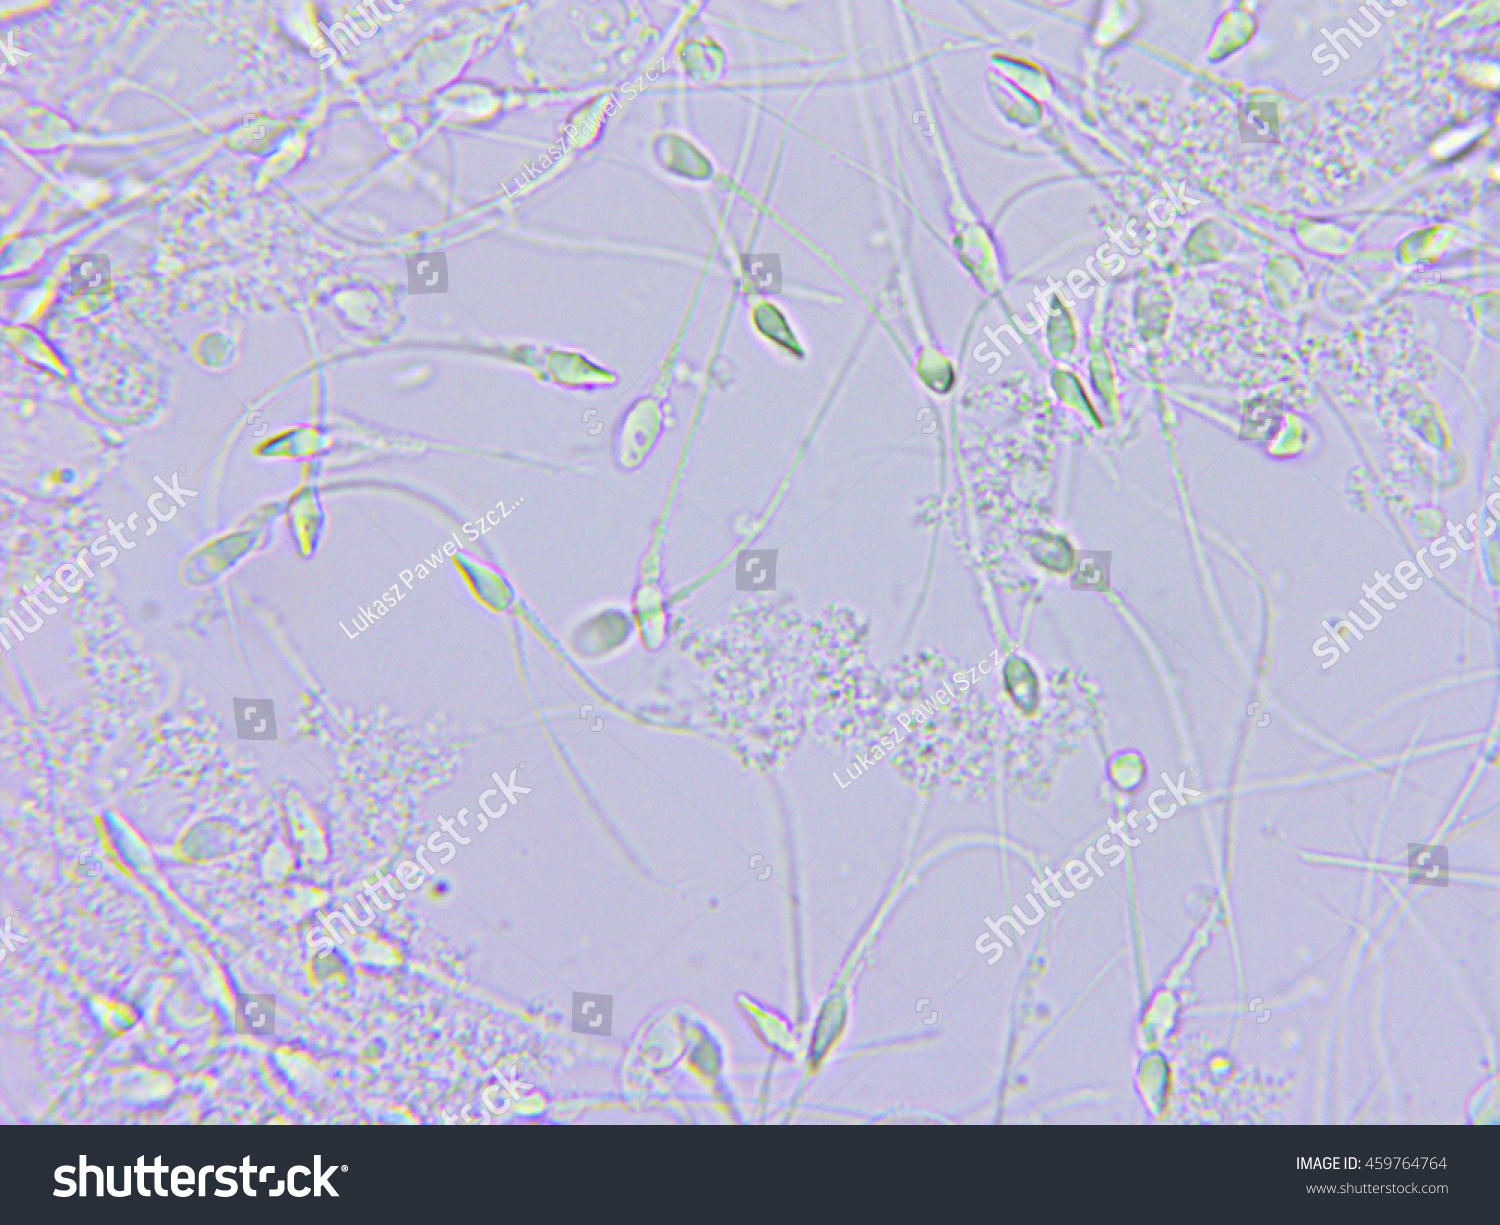 Sperm Microscopic View Stock Photo 459764764 - Shutterstock